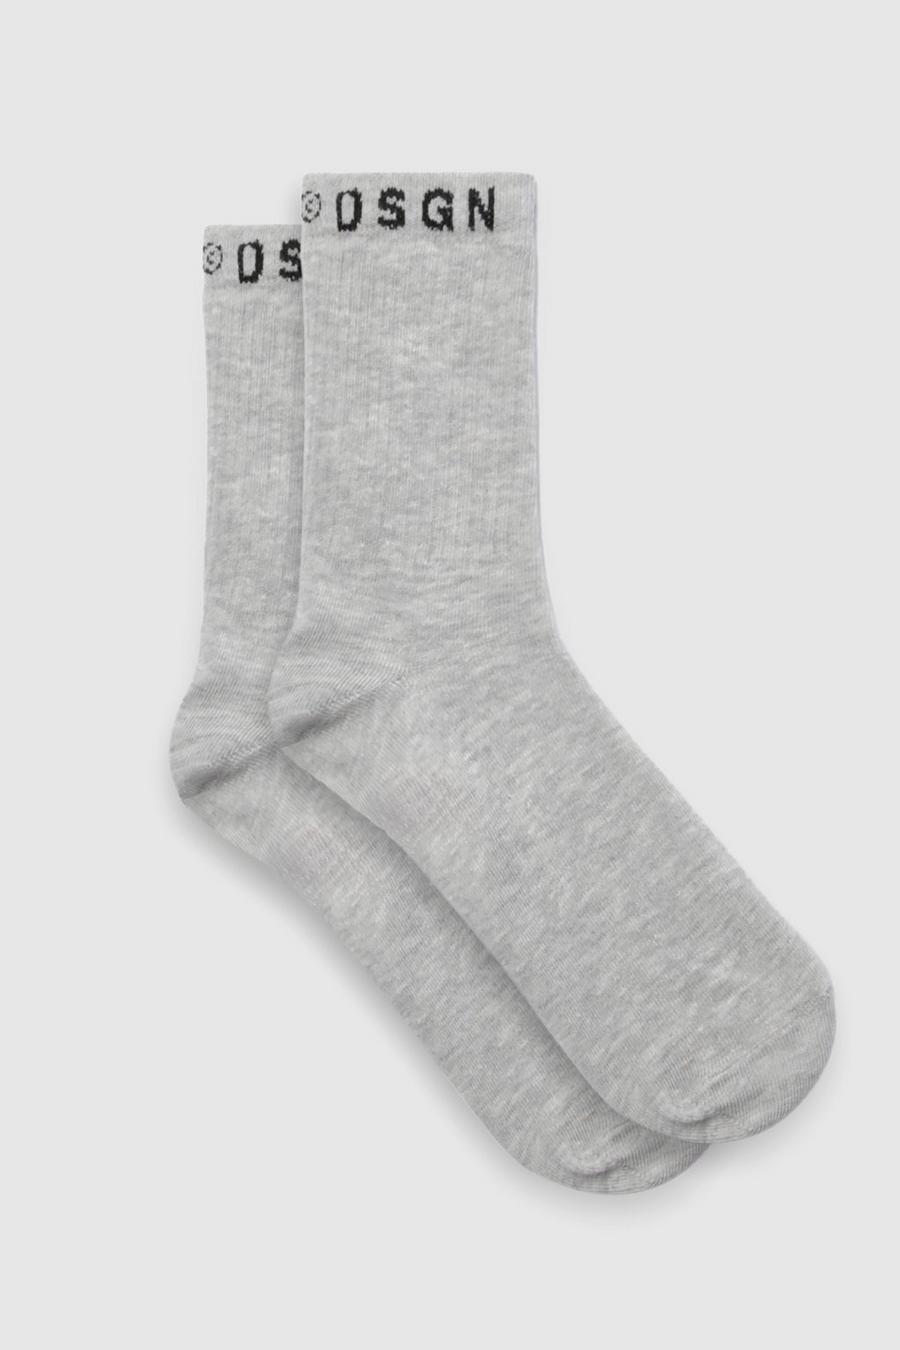 Dsgn Studio Basic Sport-Socken, Grey marl image number 1